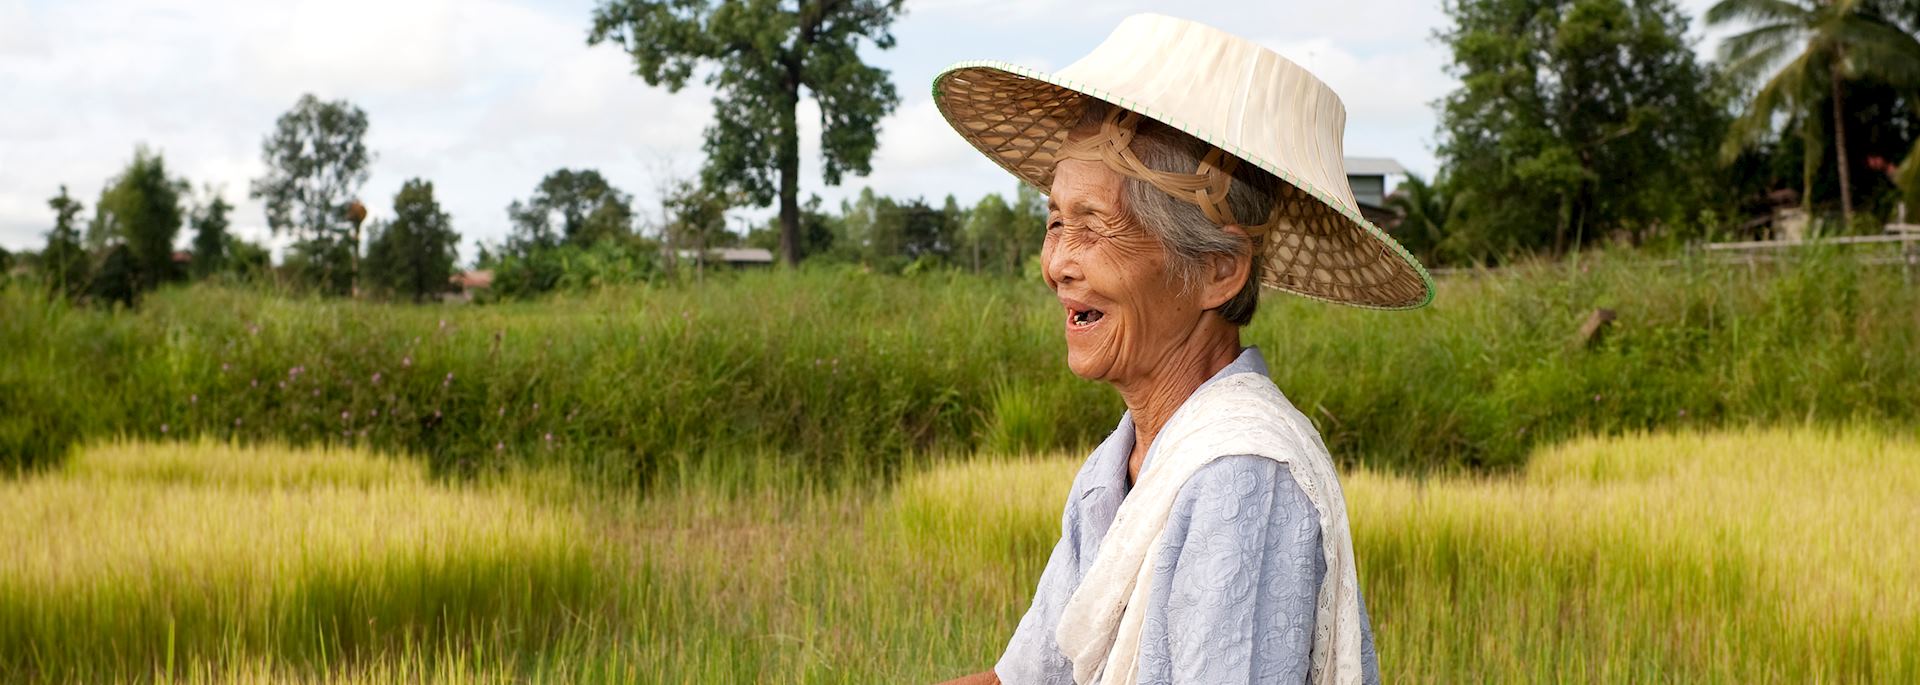 Woman working in a paddy field, Vietnam